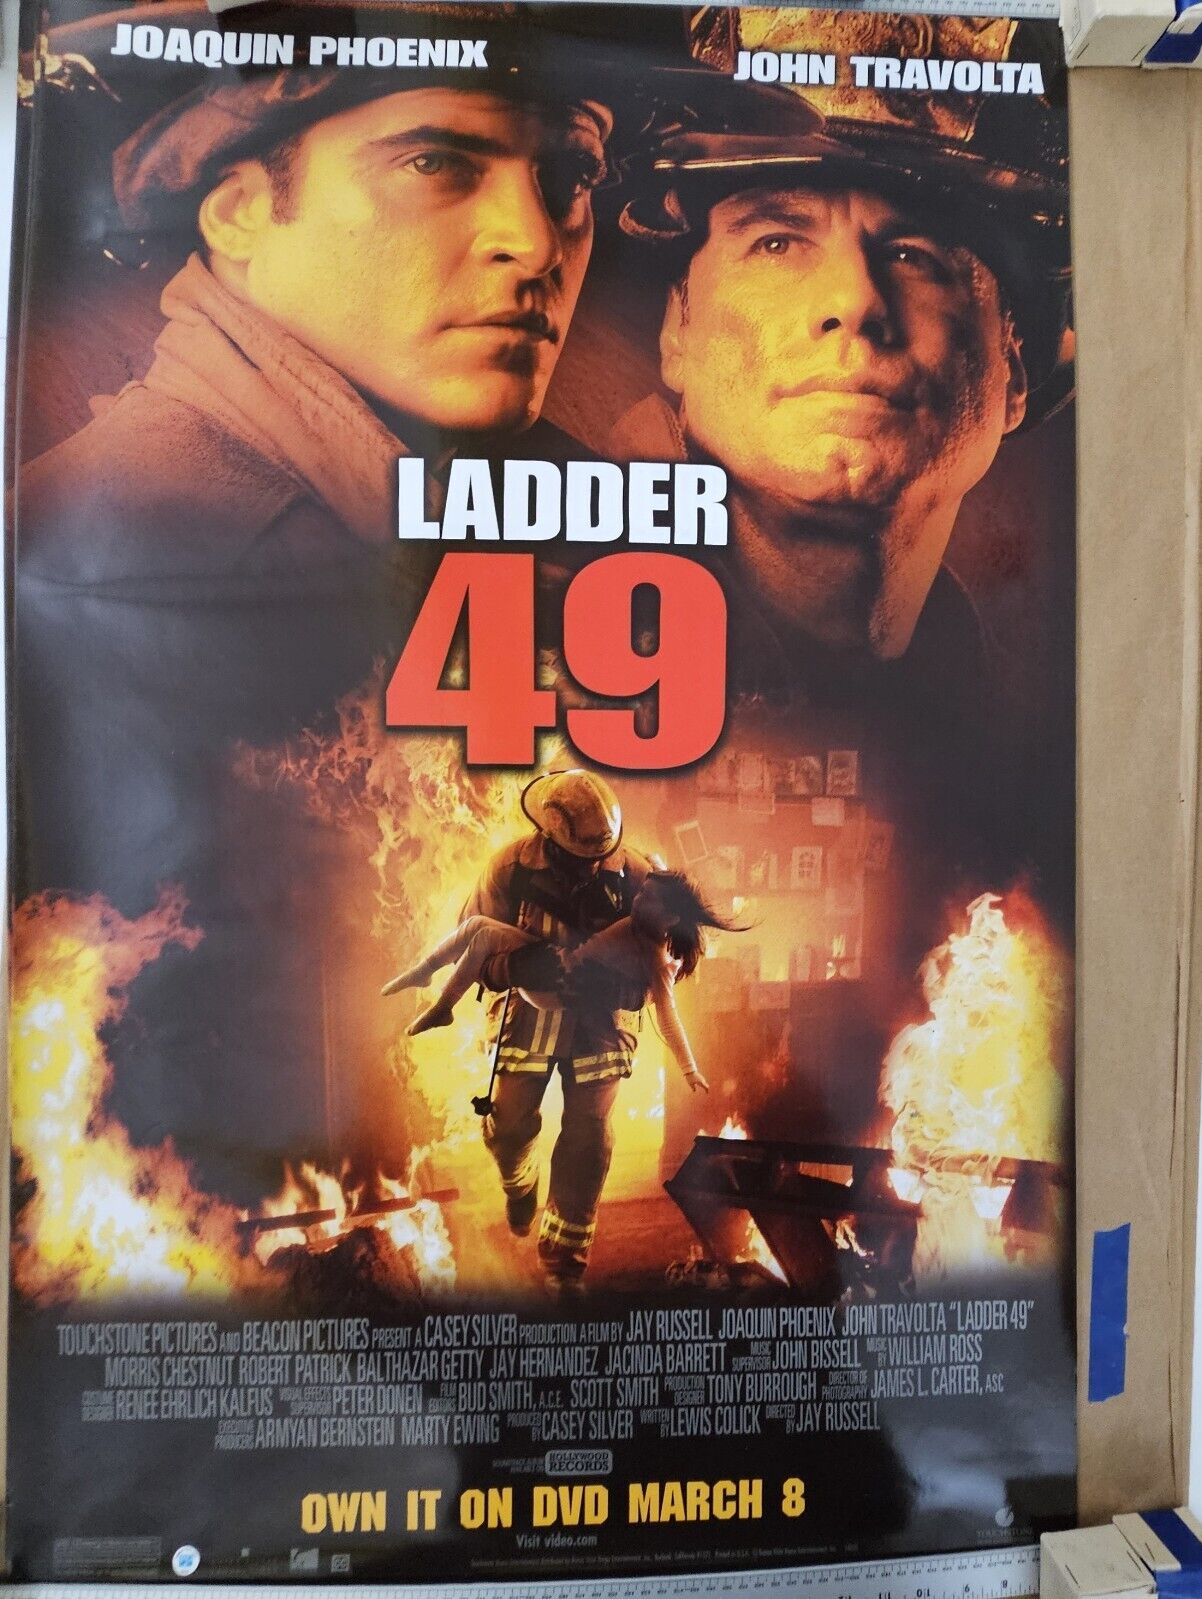 Joaquin Phoenix and John  Travolta in Ladder 49  27 DVD promotional Movie poster